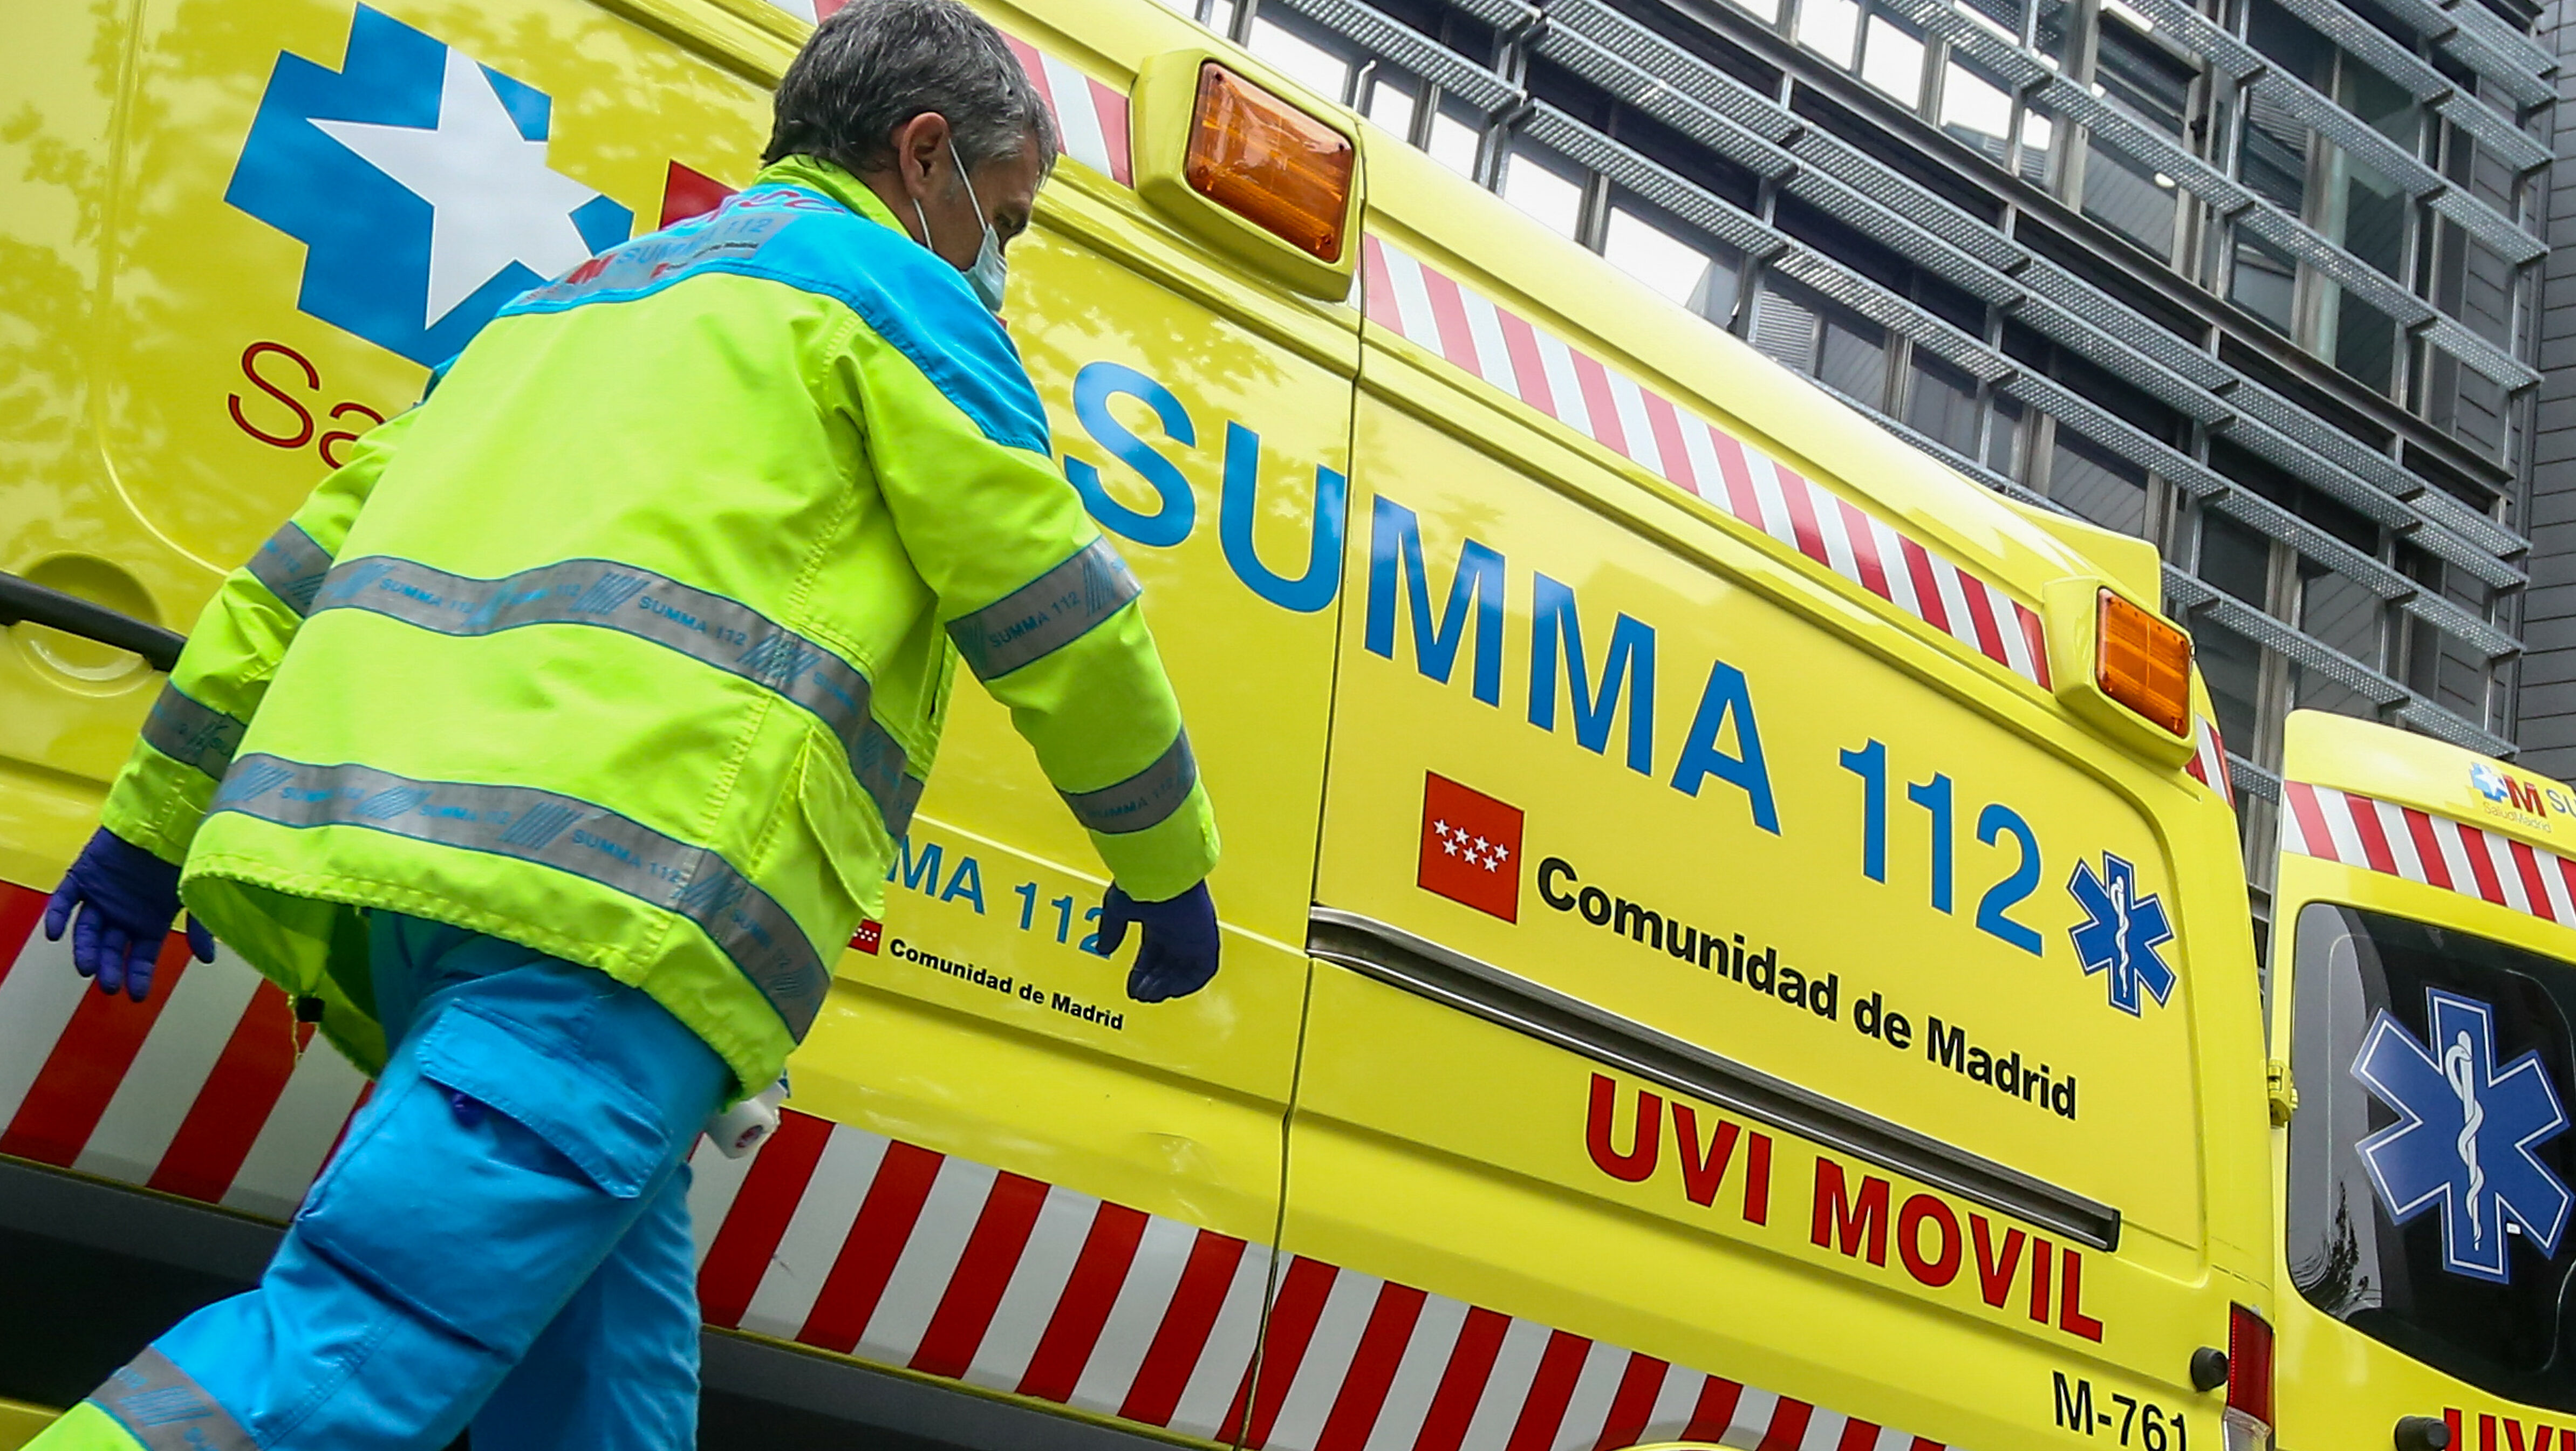 Dos operarios heridos graves en explosión de cuadro eléctrico en Fuenlabrada